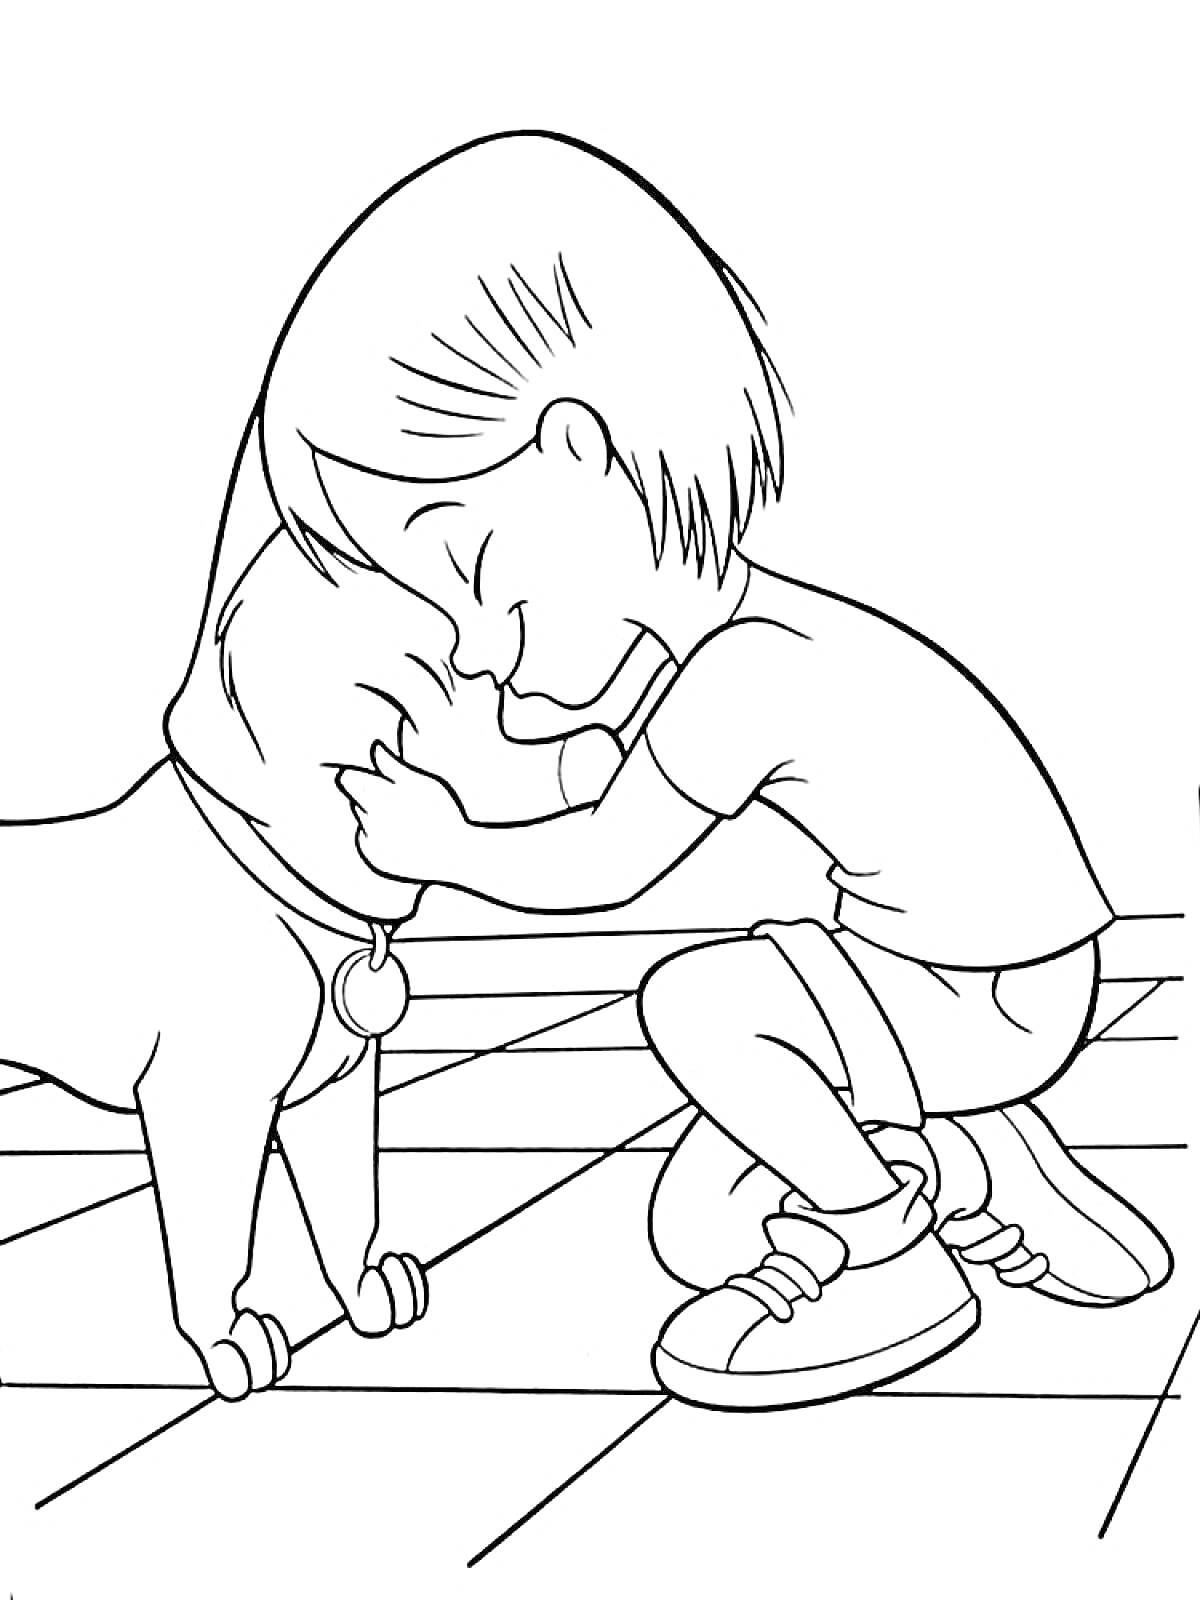 Девочка обнимает собаку на полу